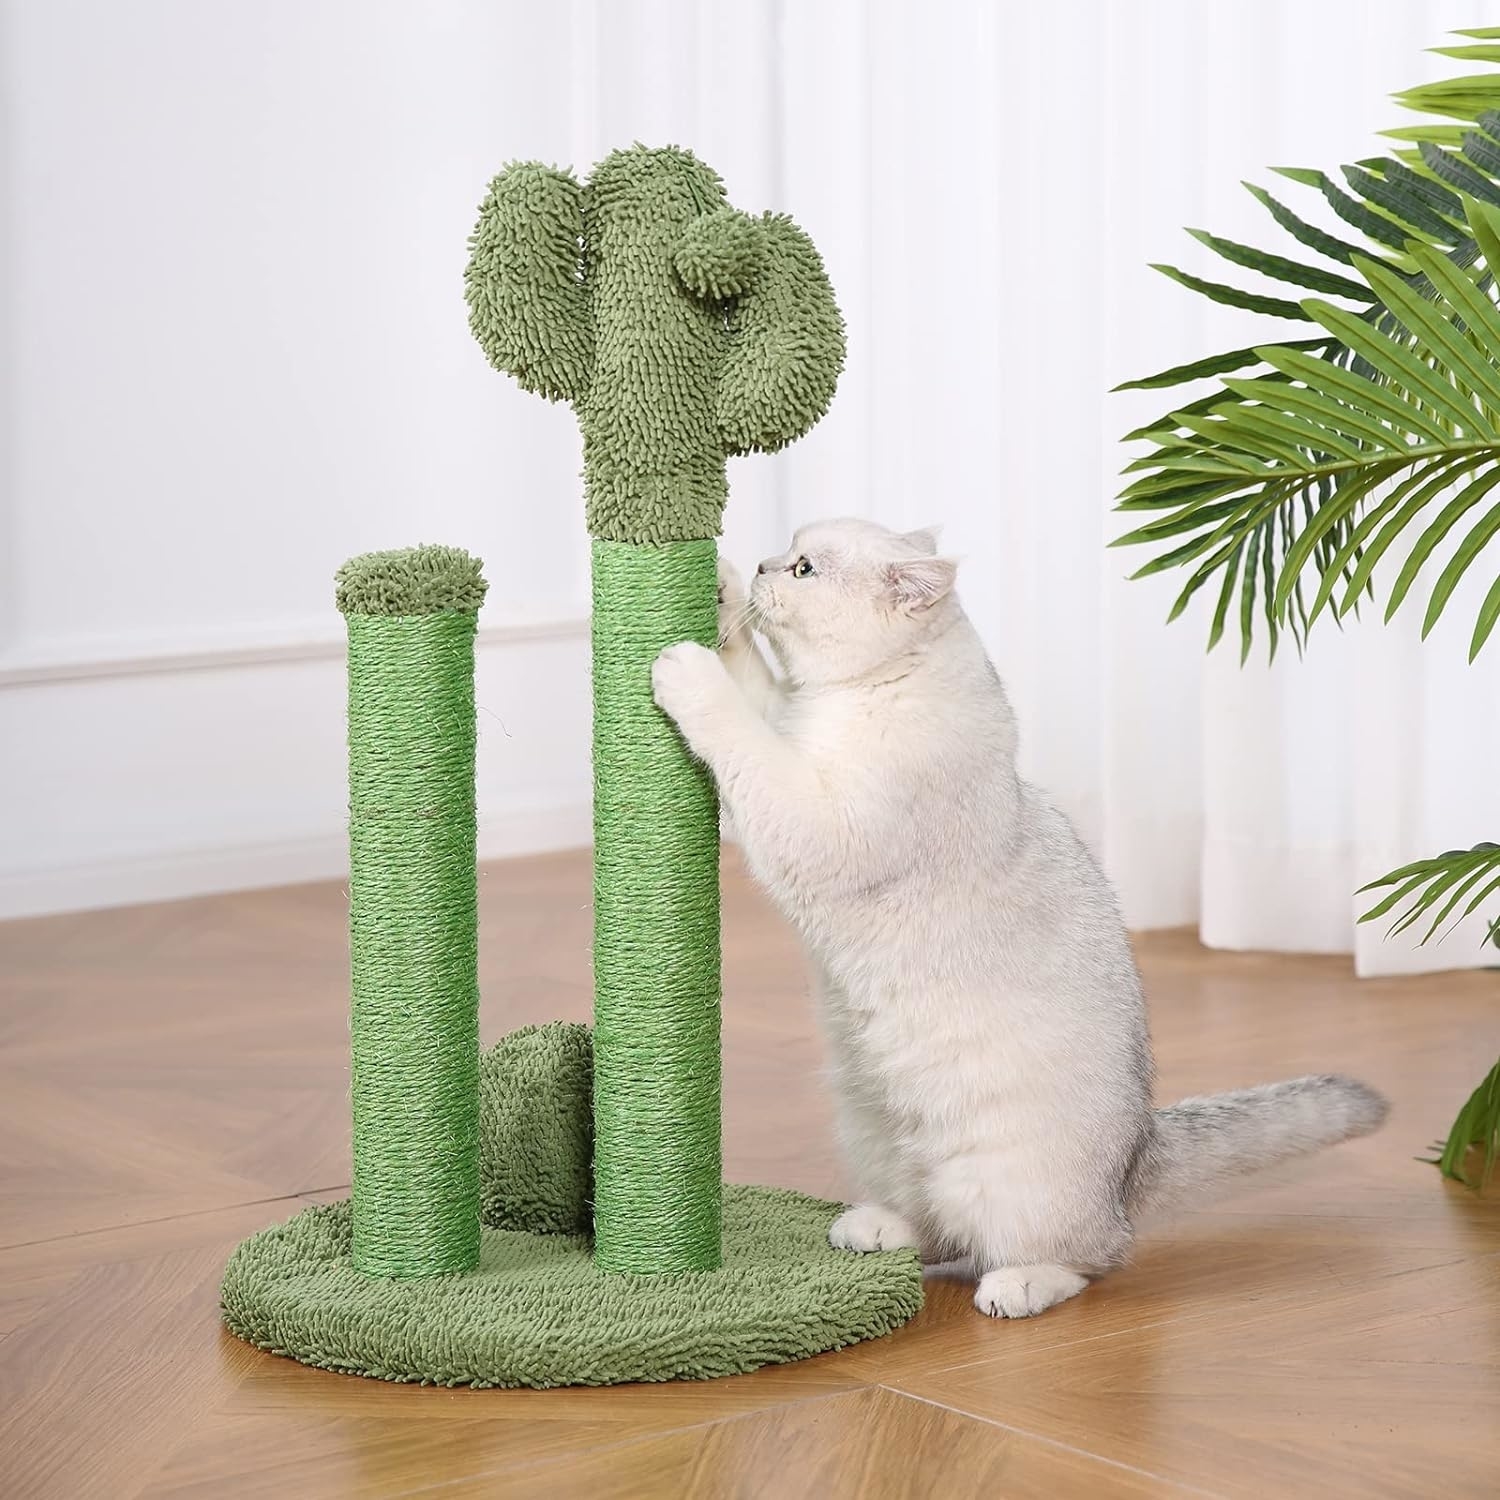 A fluffy white cat scratching the green, cactus cat scratcher